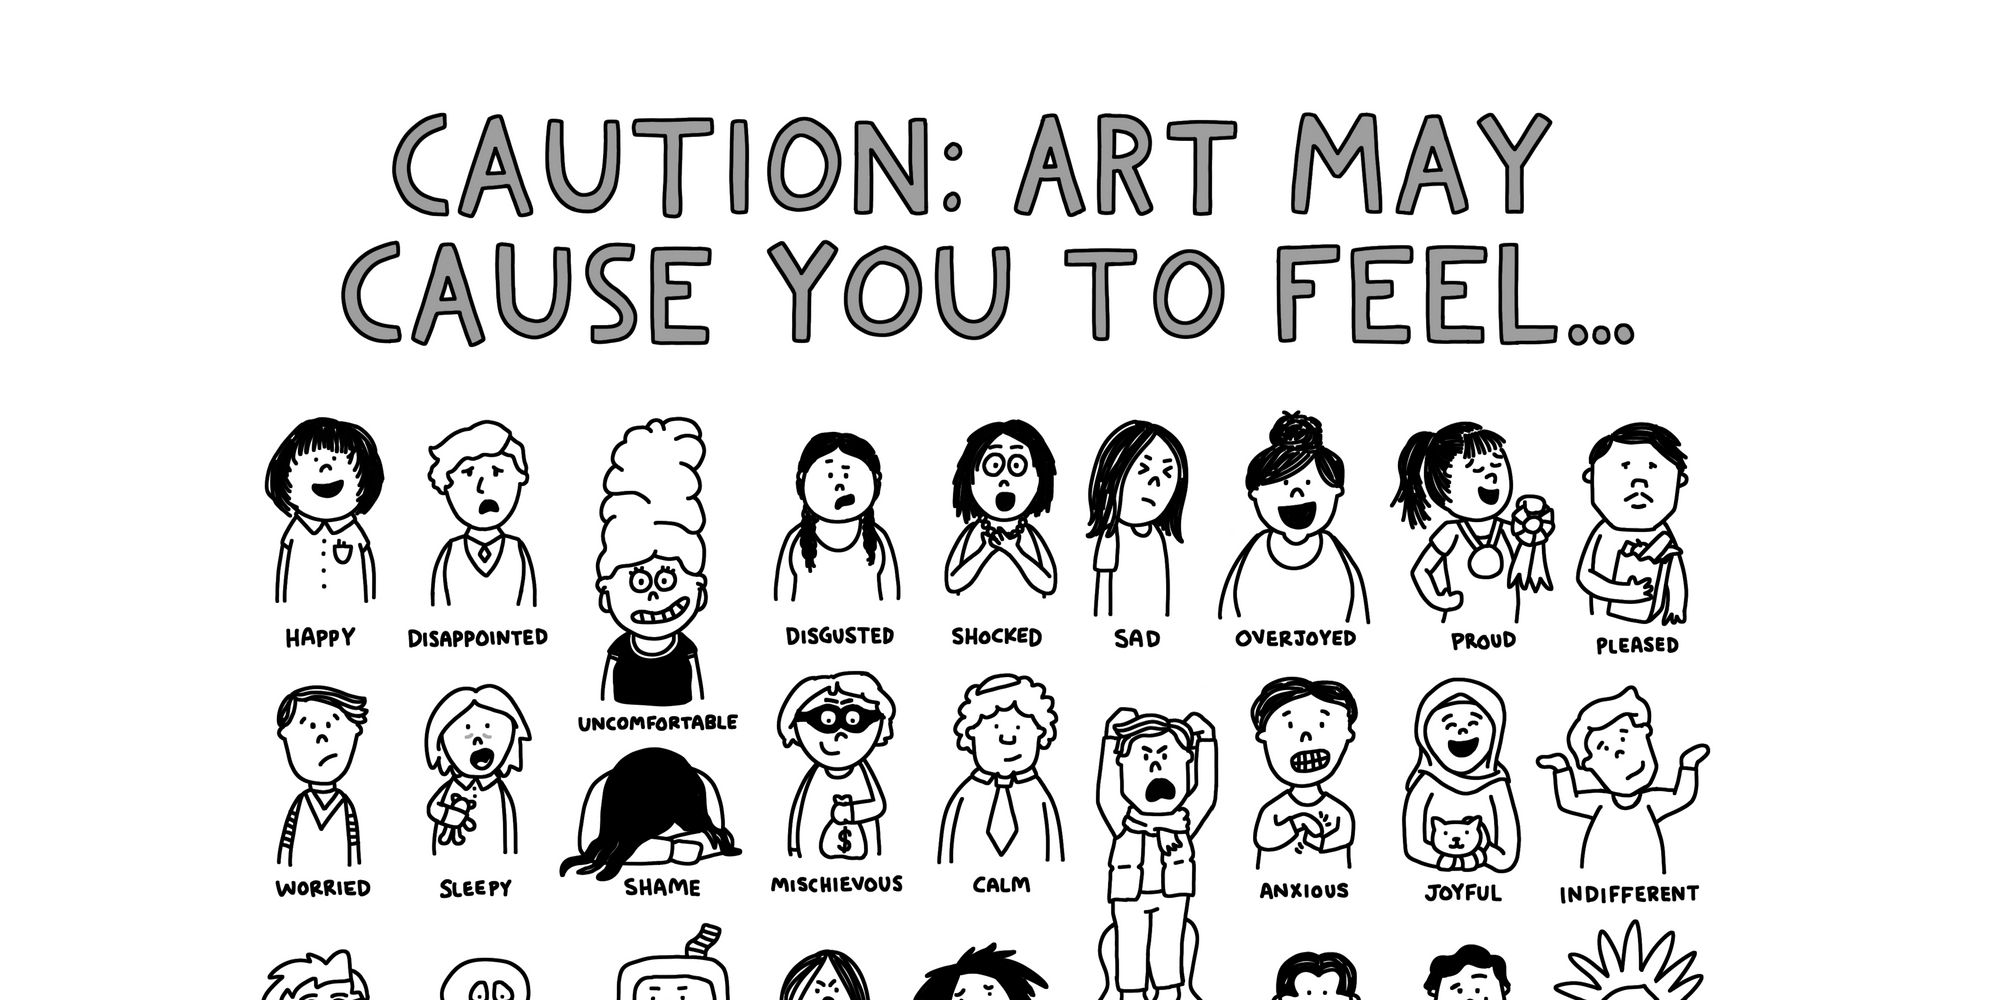 Lindsay Braman. Caution: Art May Cause You to Feel. 2022. Original illustration created for MoMA. © Lindsay Braman